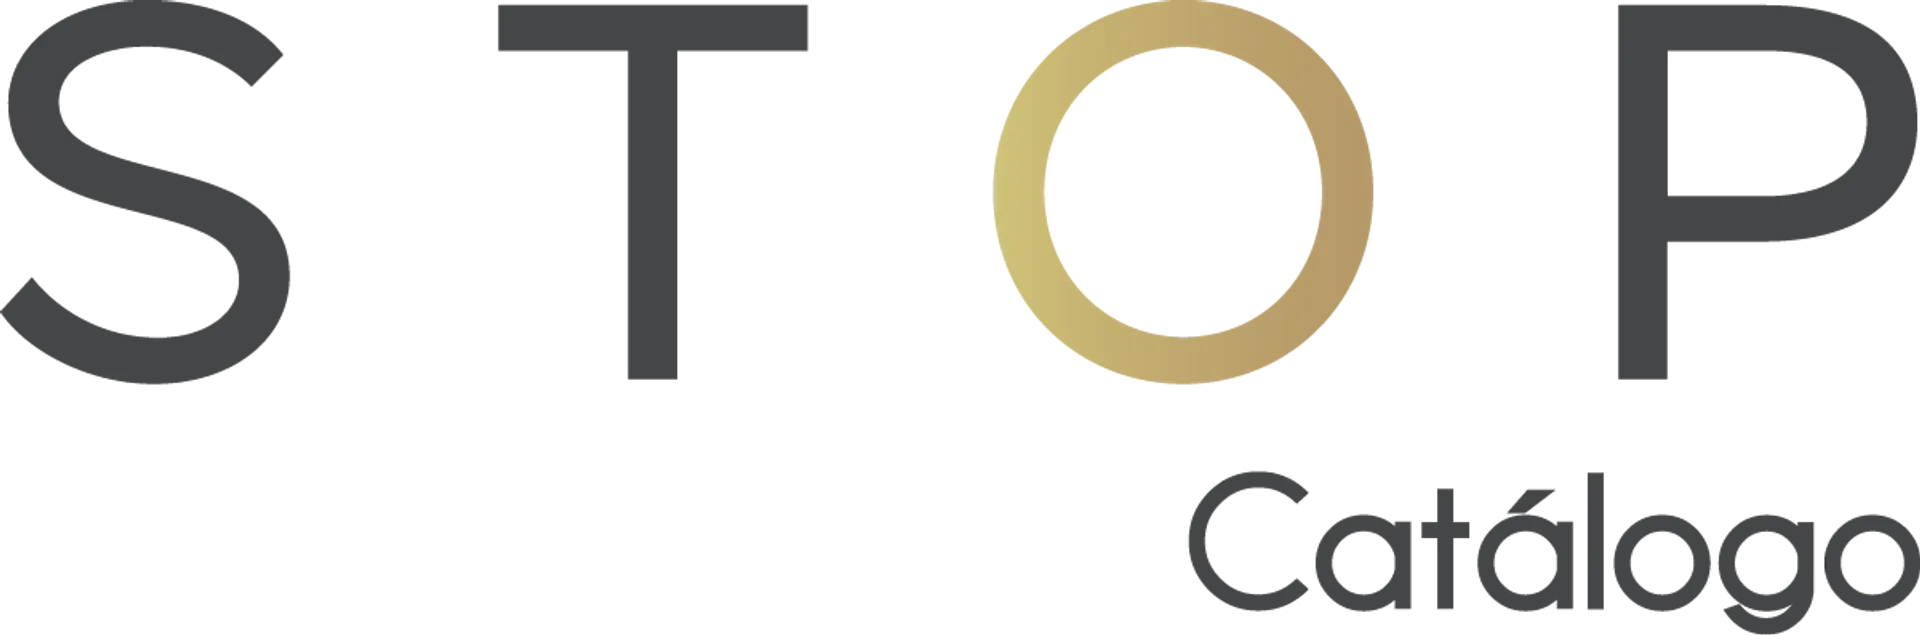 STOP CATÁLOGO logo